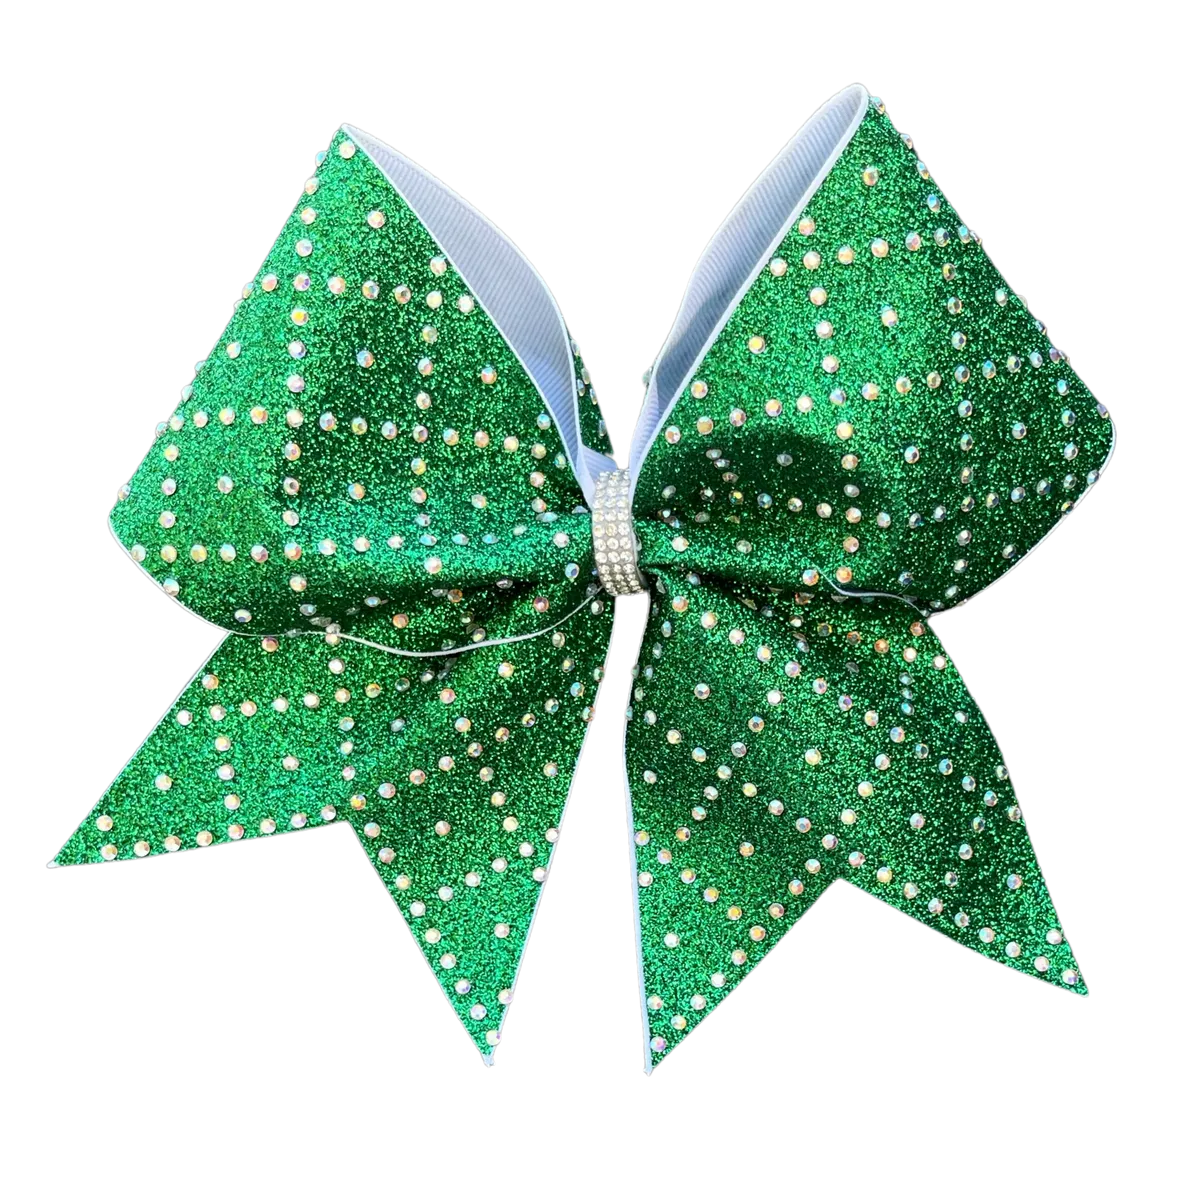 green glitter rhinestone bow